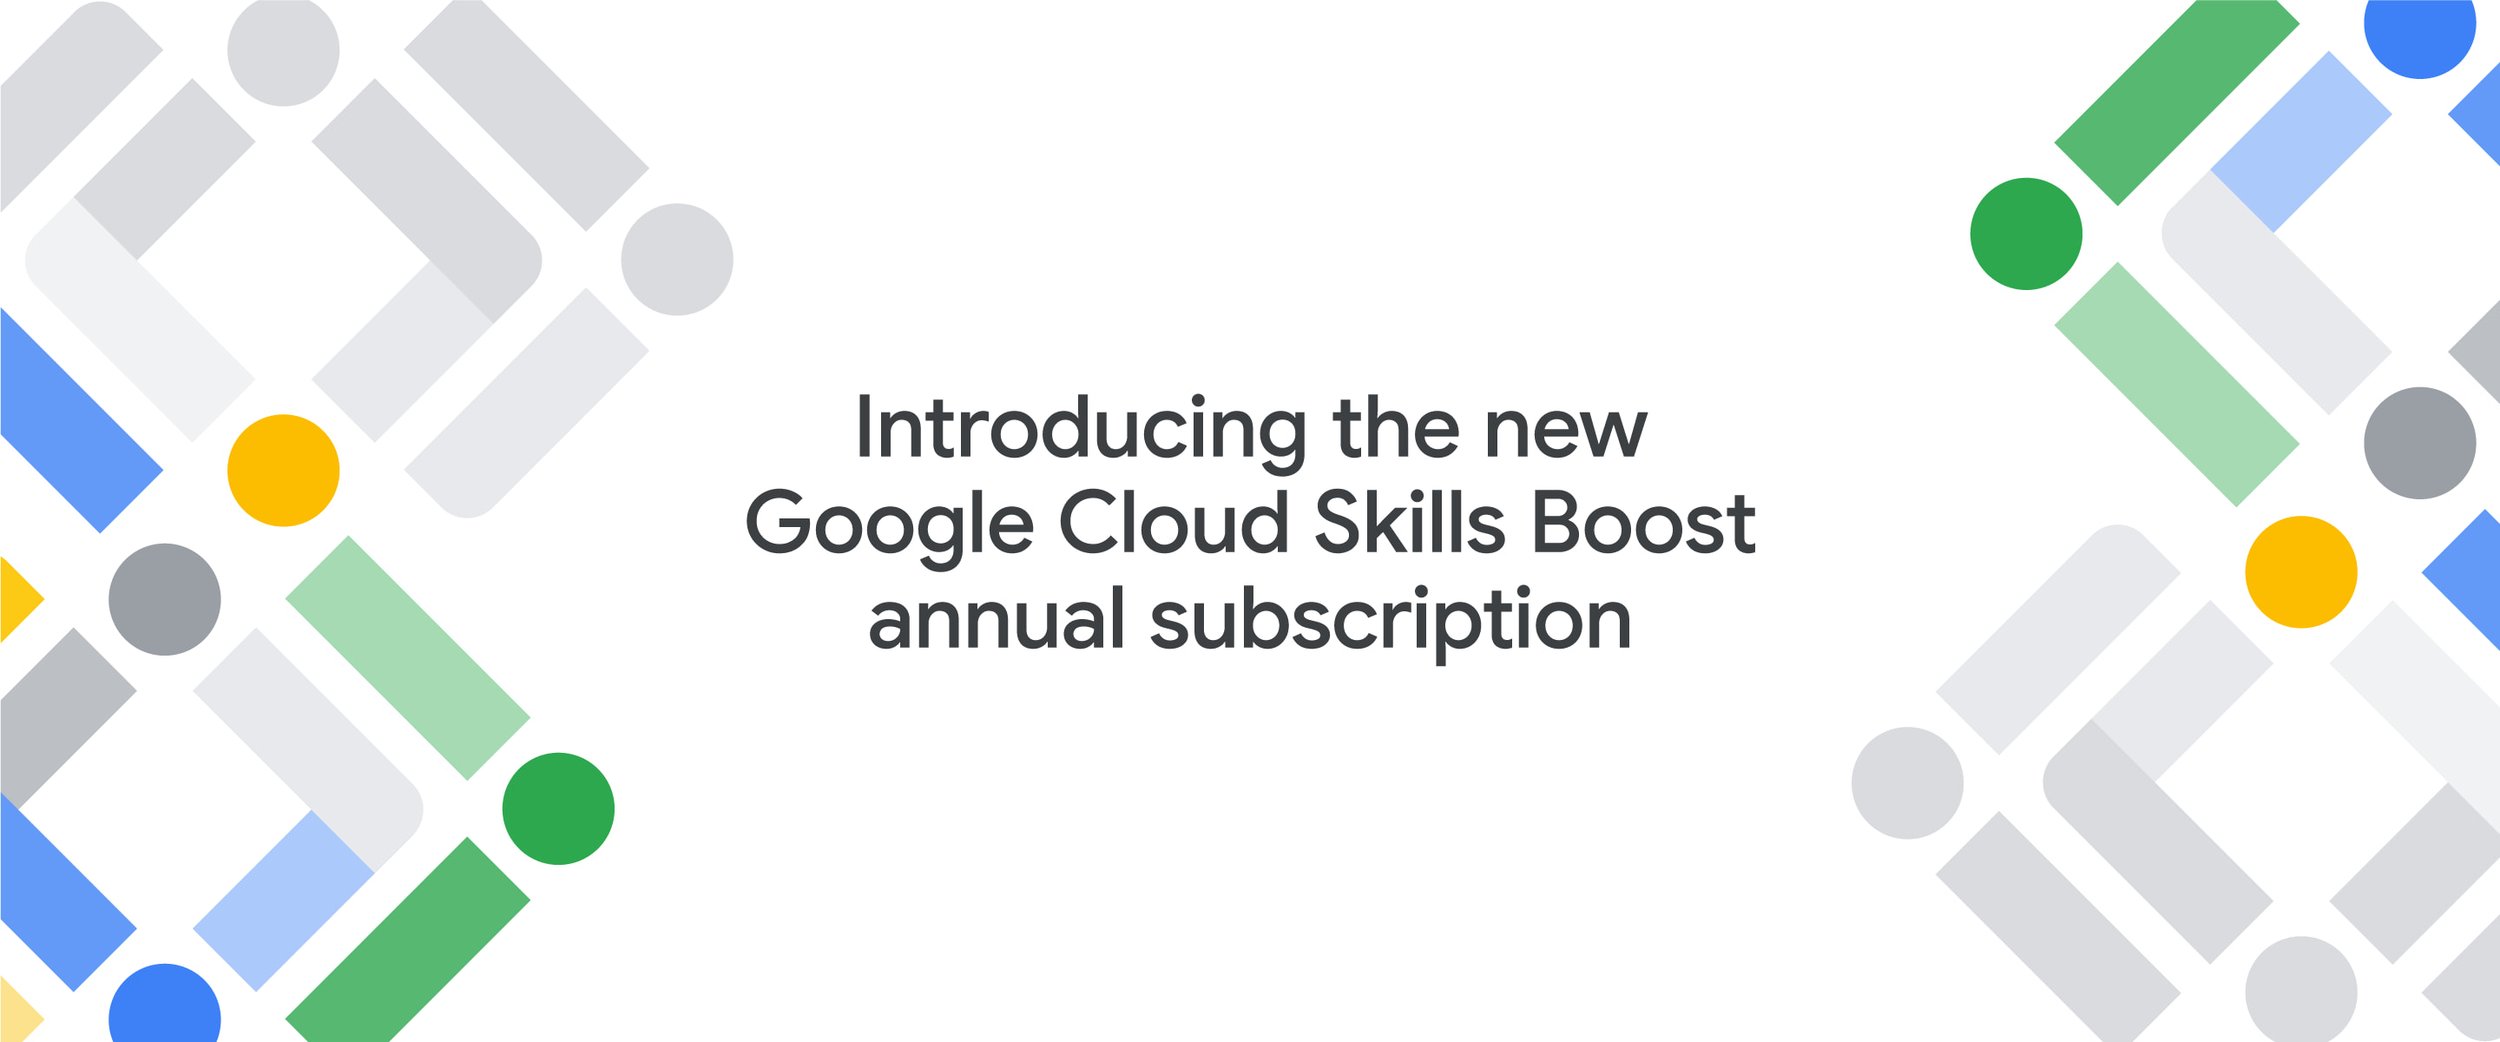 https://storage.googleapis.com/gweb-cloudblog-publish/images/Google_Cloud_Skills_Boost_annual_subscript.max-2576x1042.jpg